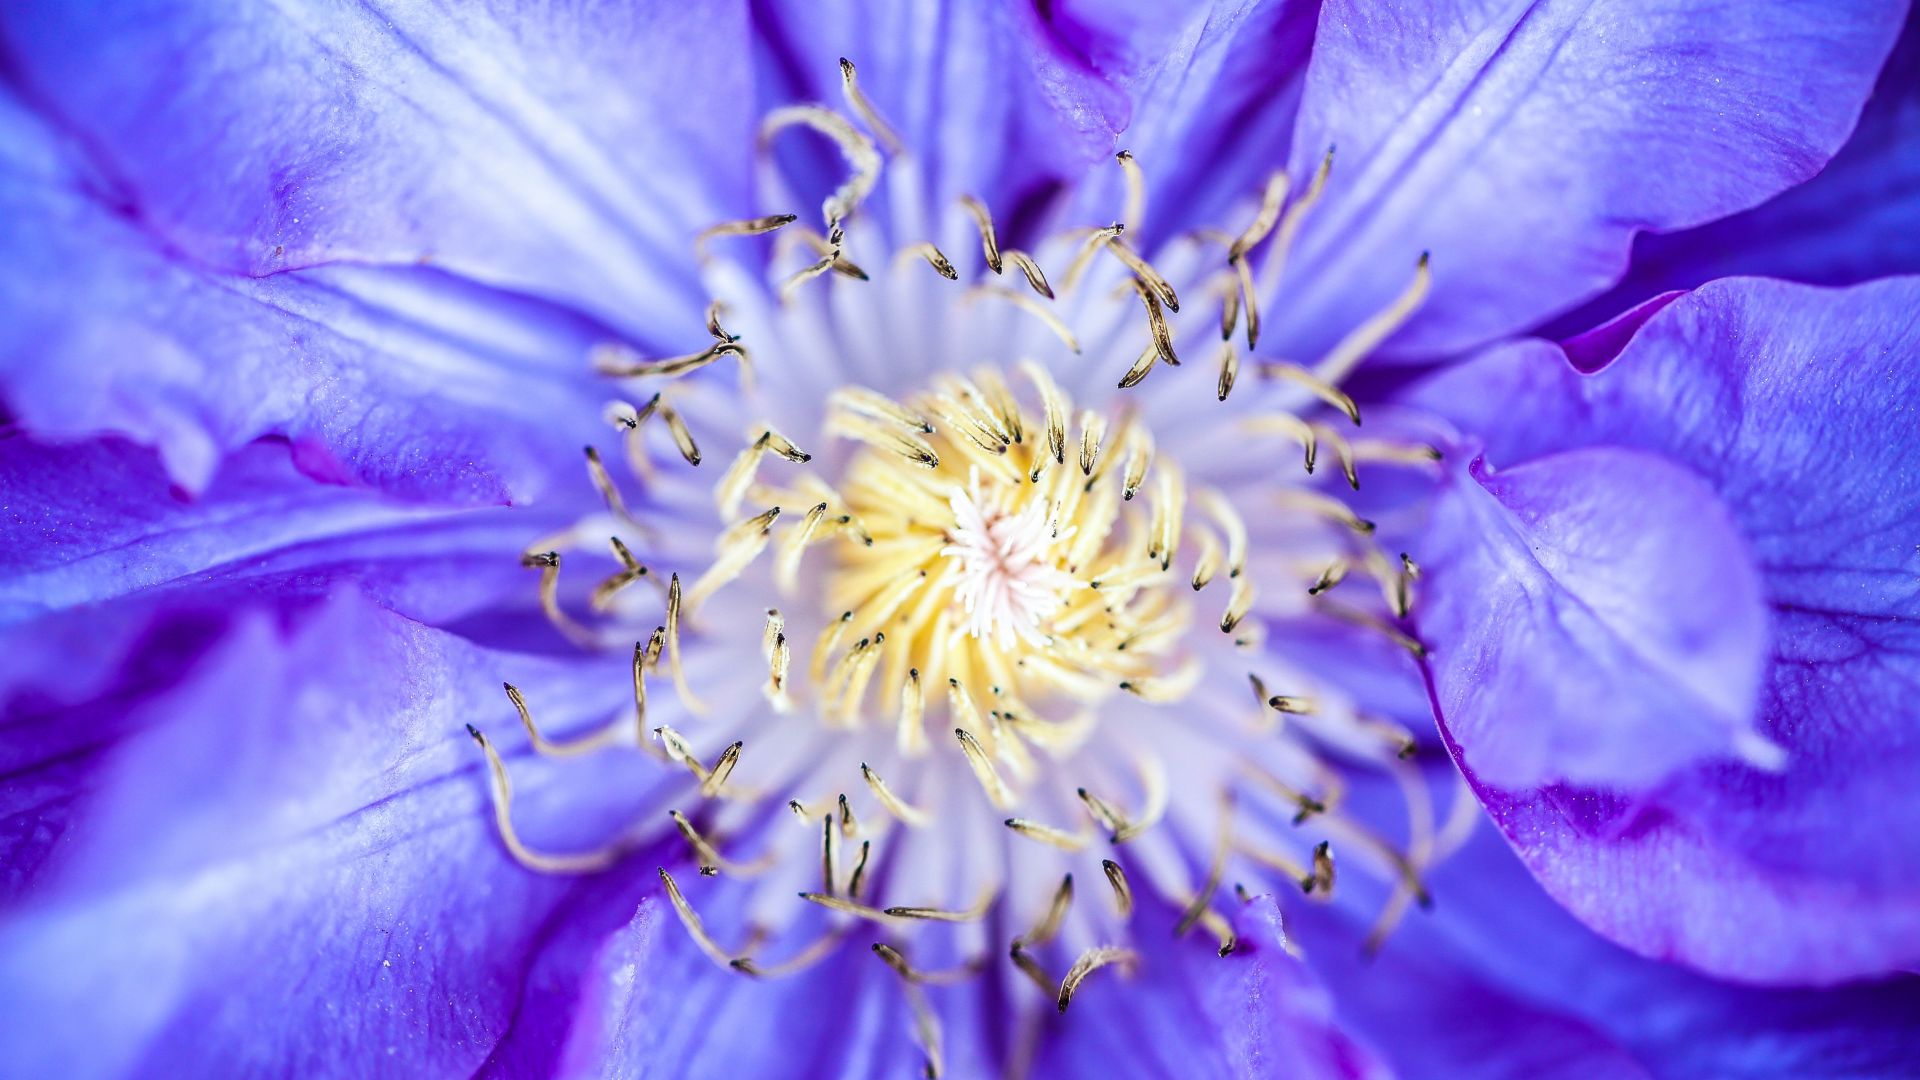 Клематисы, 5k, 4k, цветы, макро, фиолетовый, Clematis, 5k, 4k wallpaper, flowers, macro, purple (horizontal)